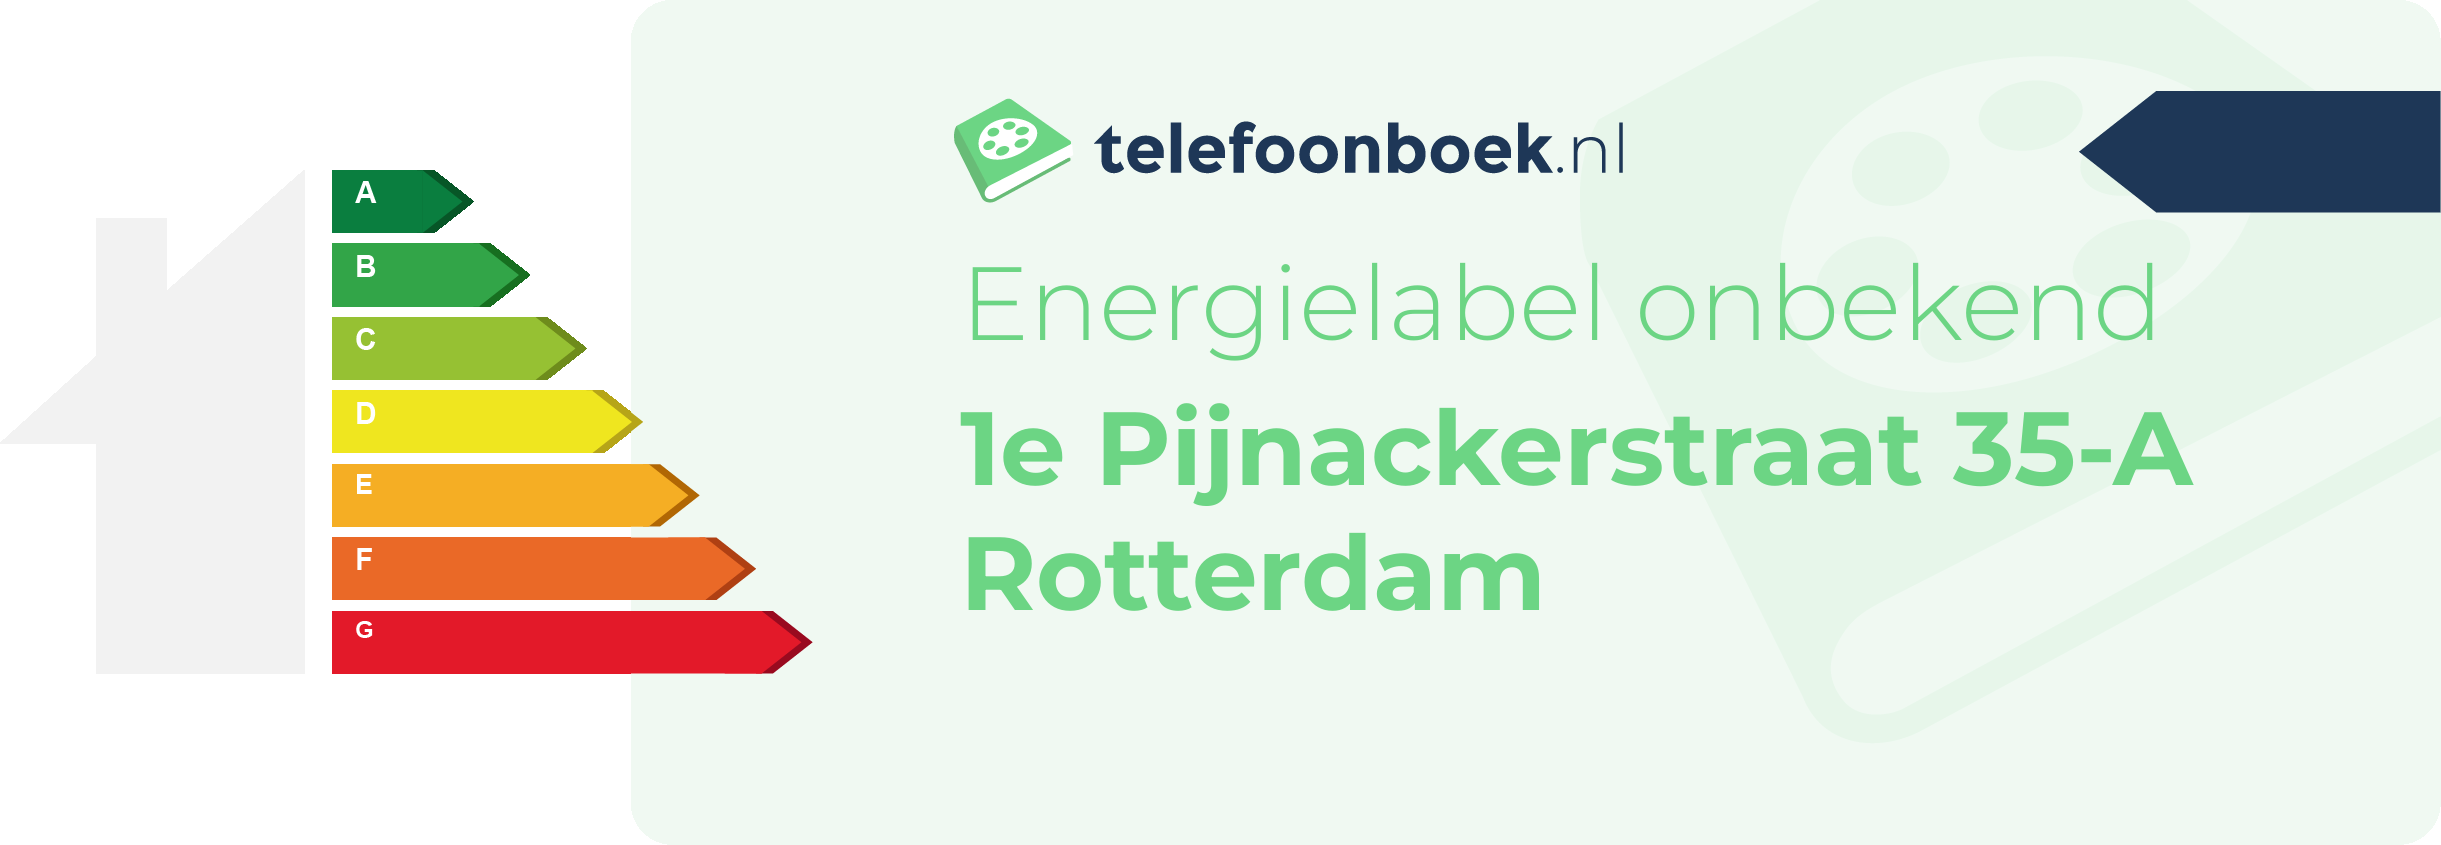 Energielabel 1e Pijnackerstraat 35-A Rotterdam